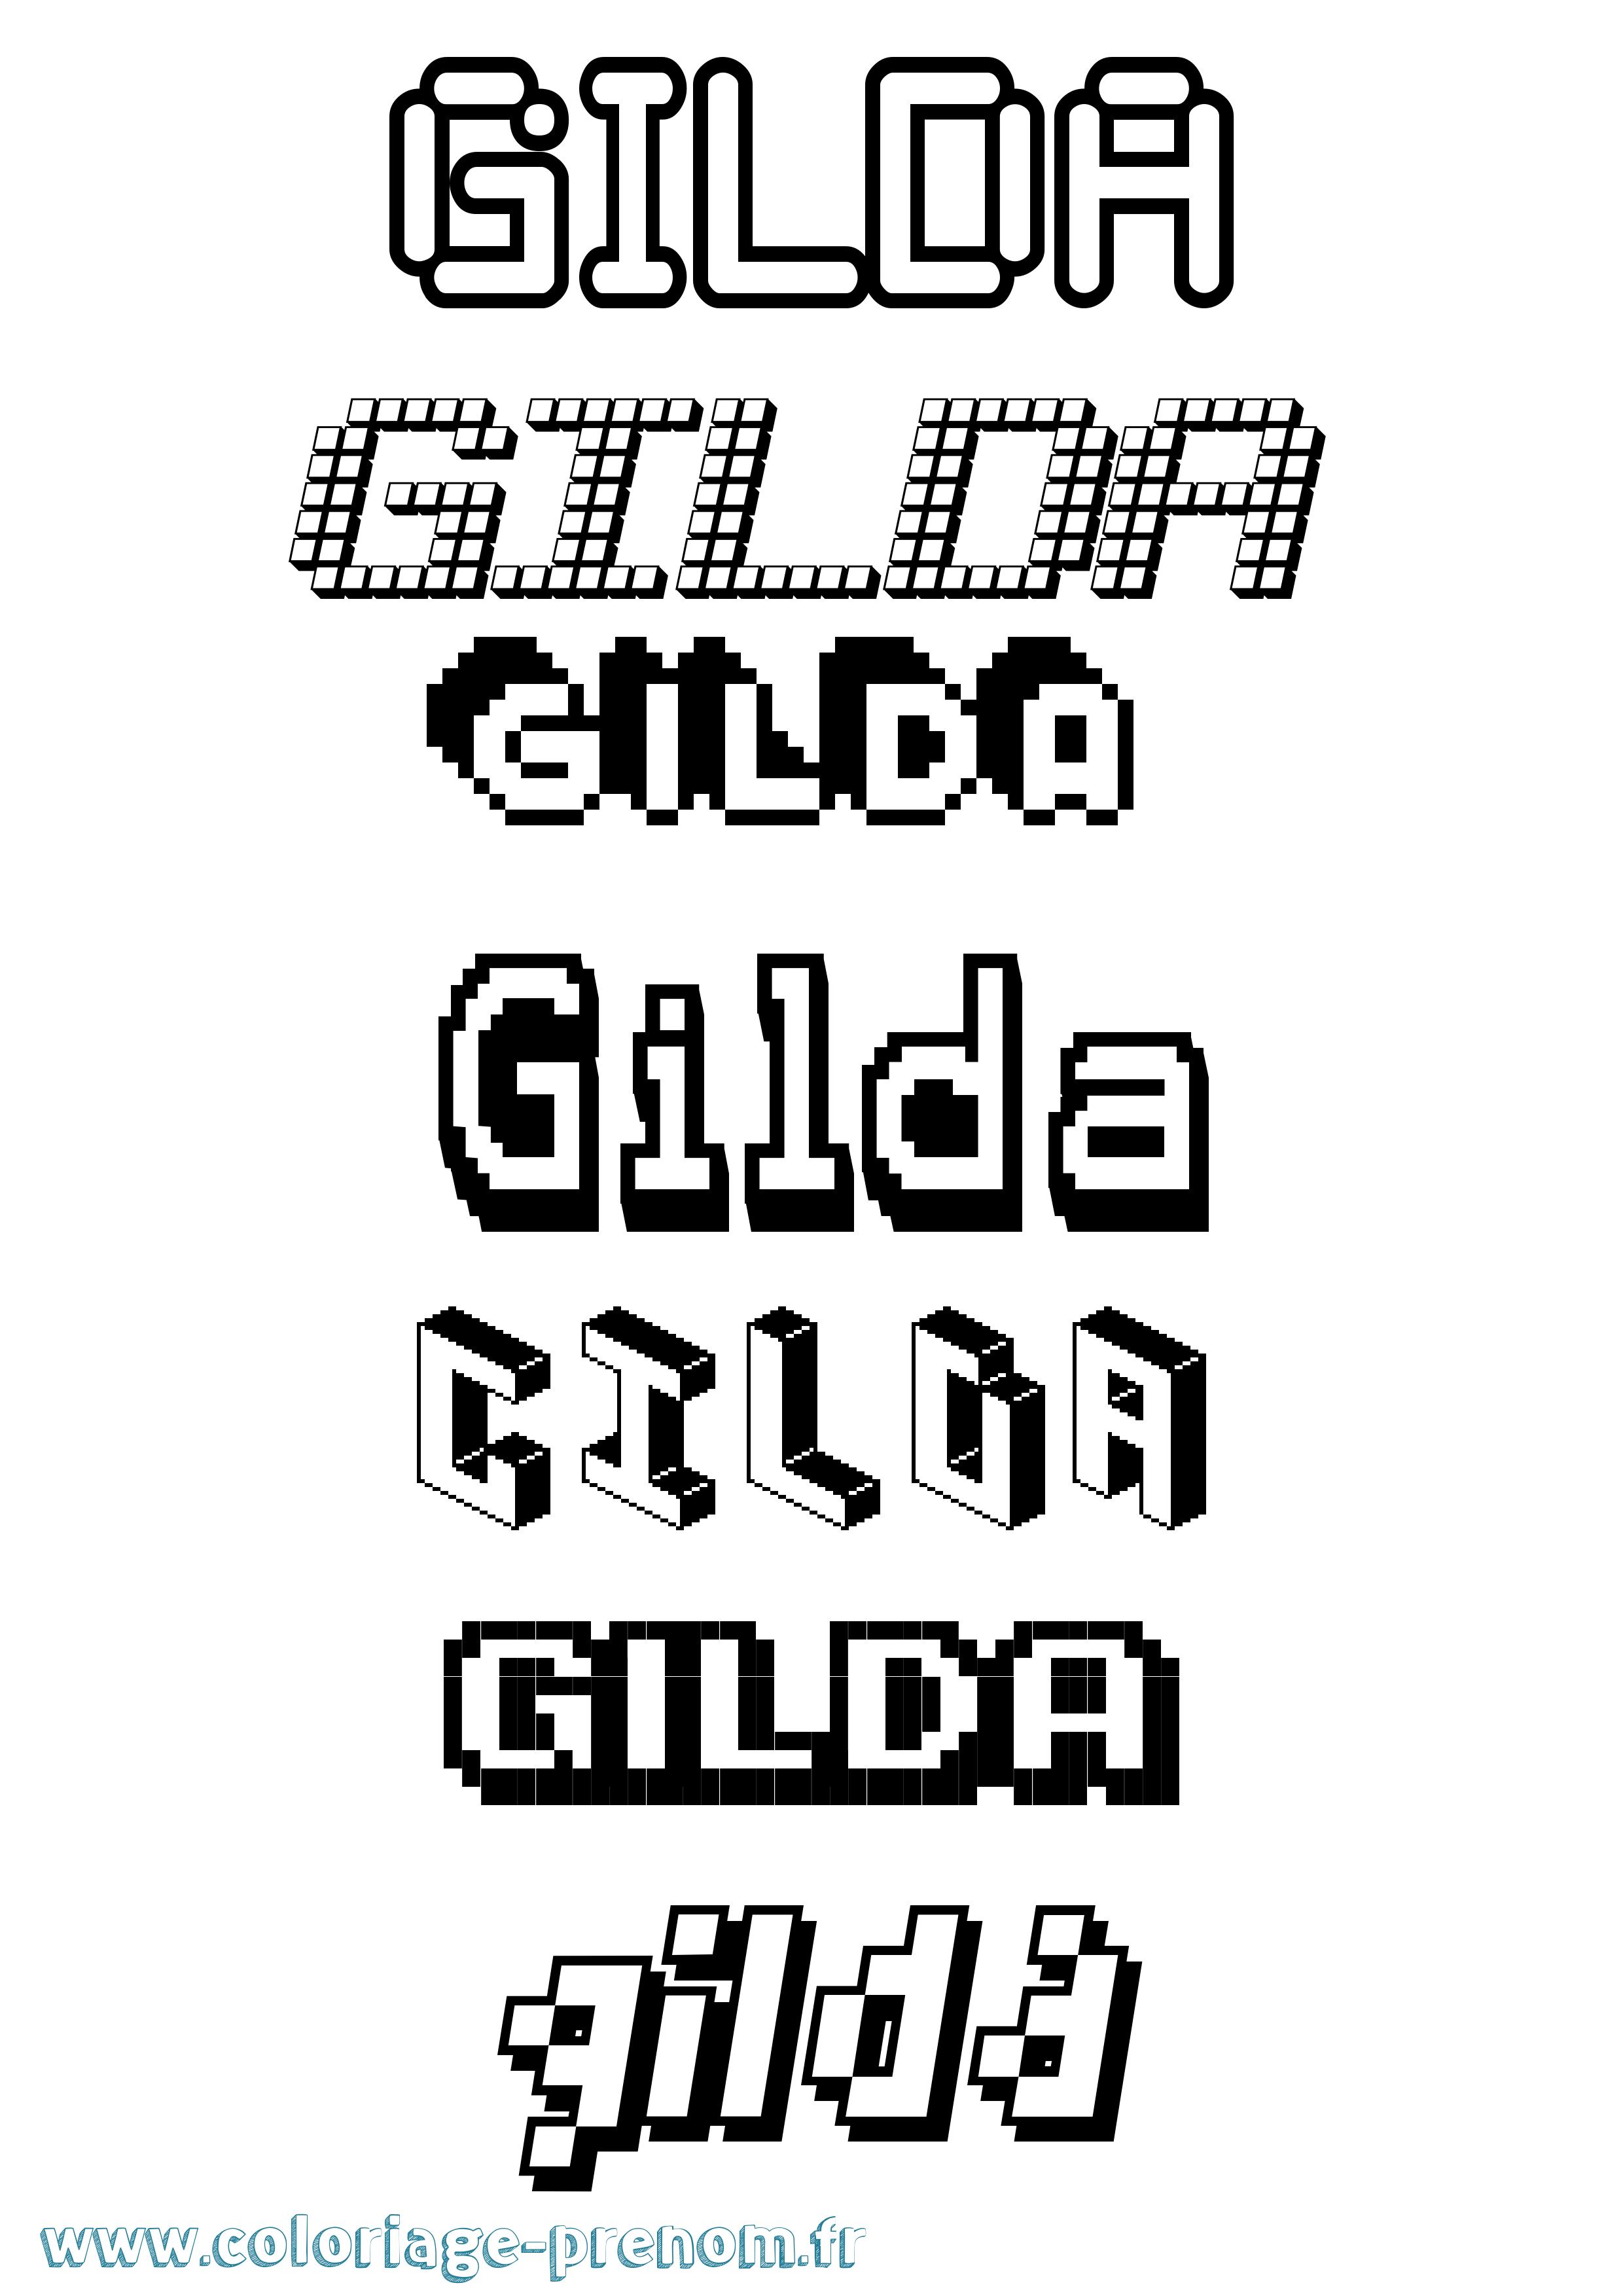 Coloriage prénom Gilda Pixel